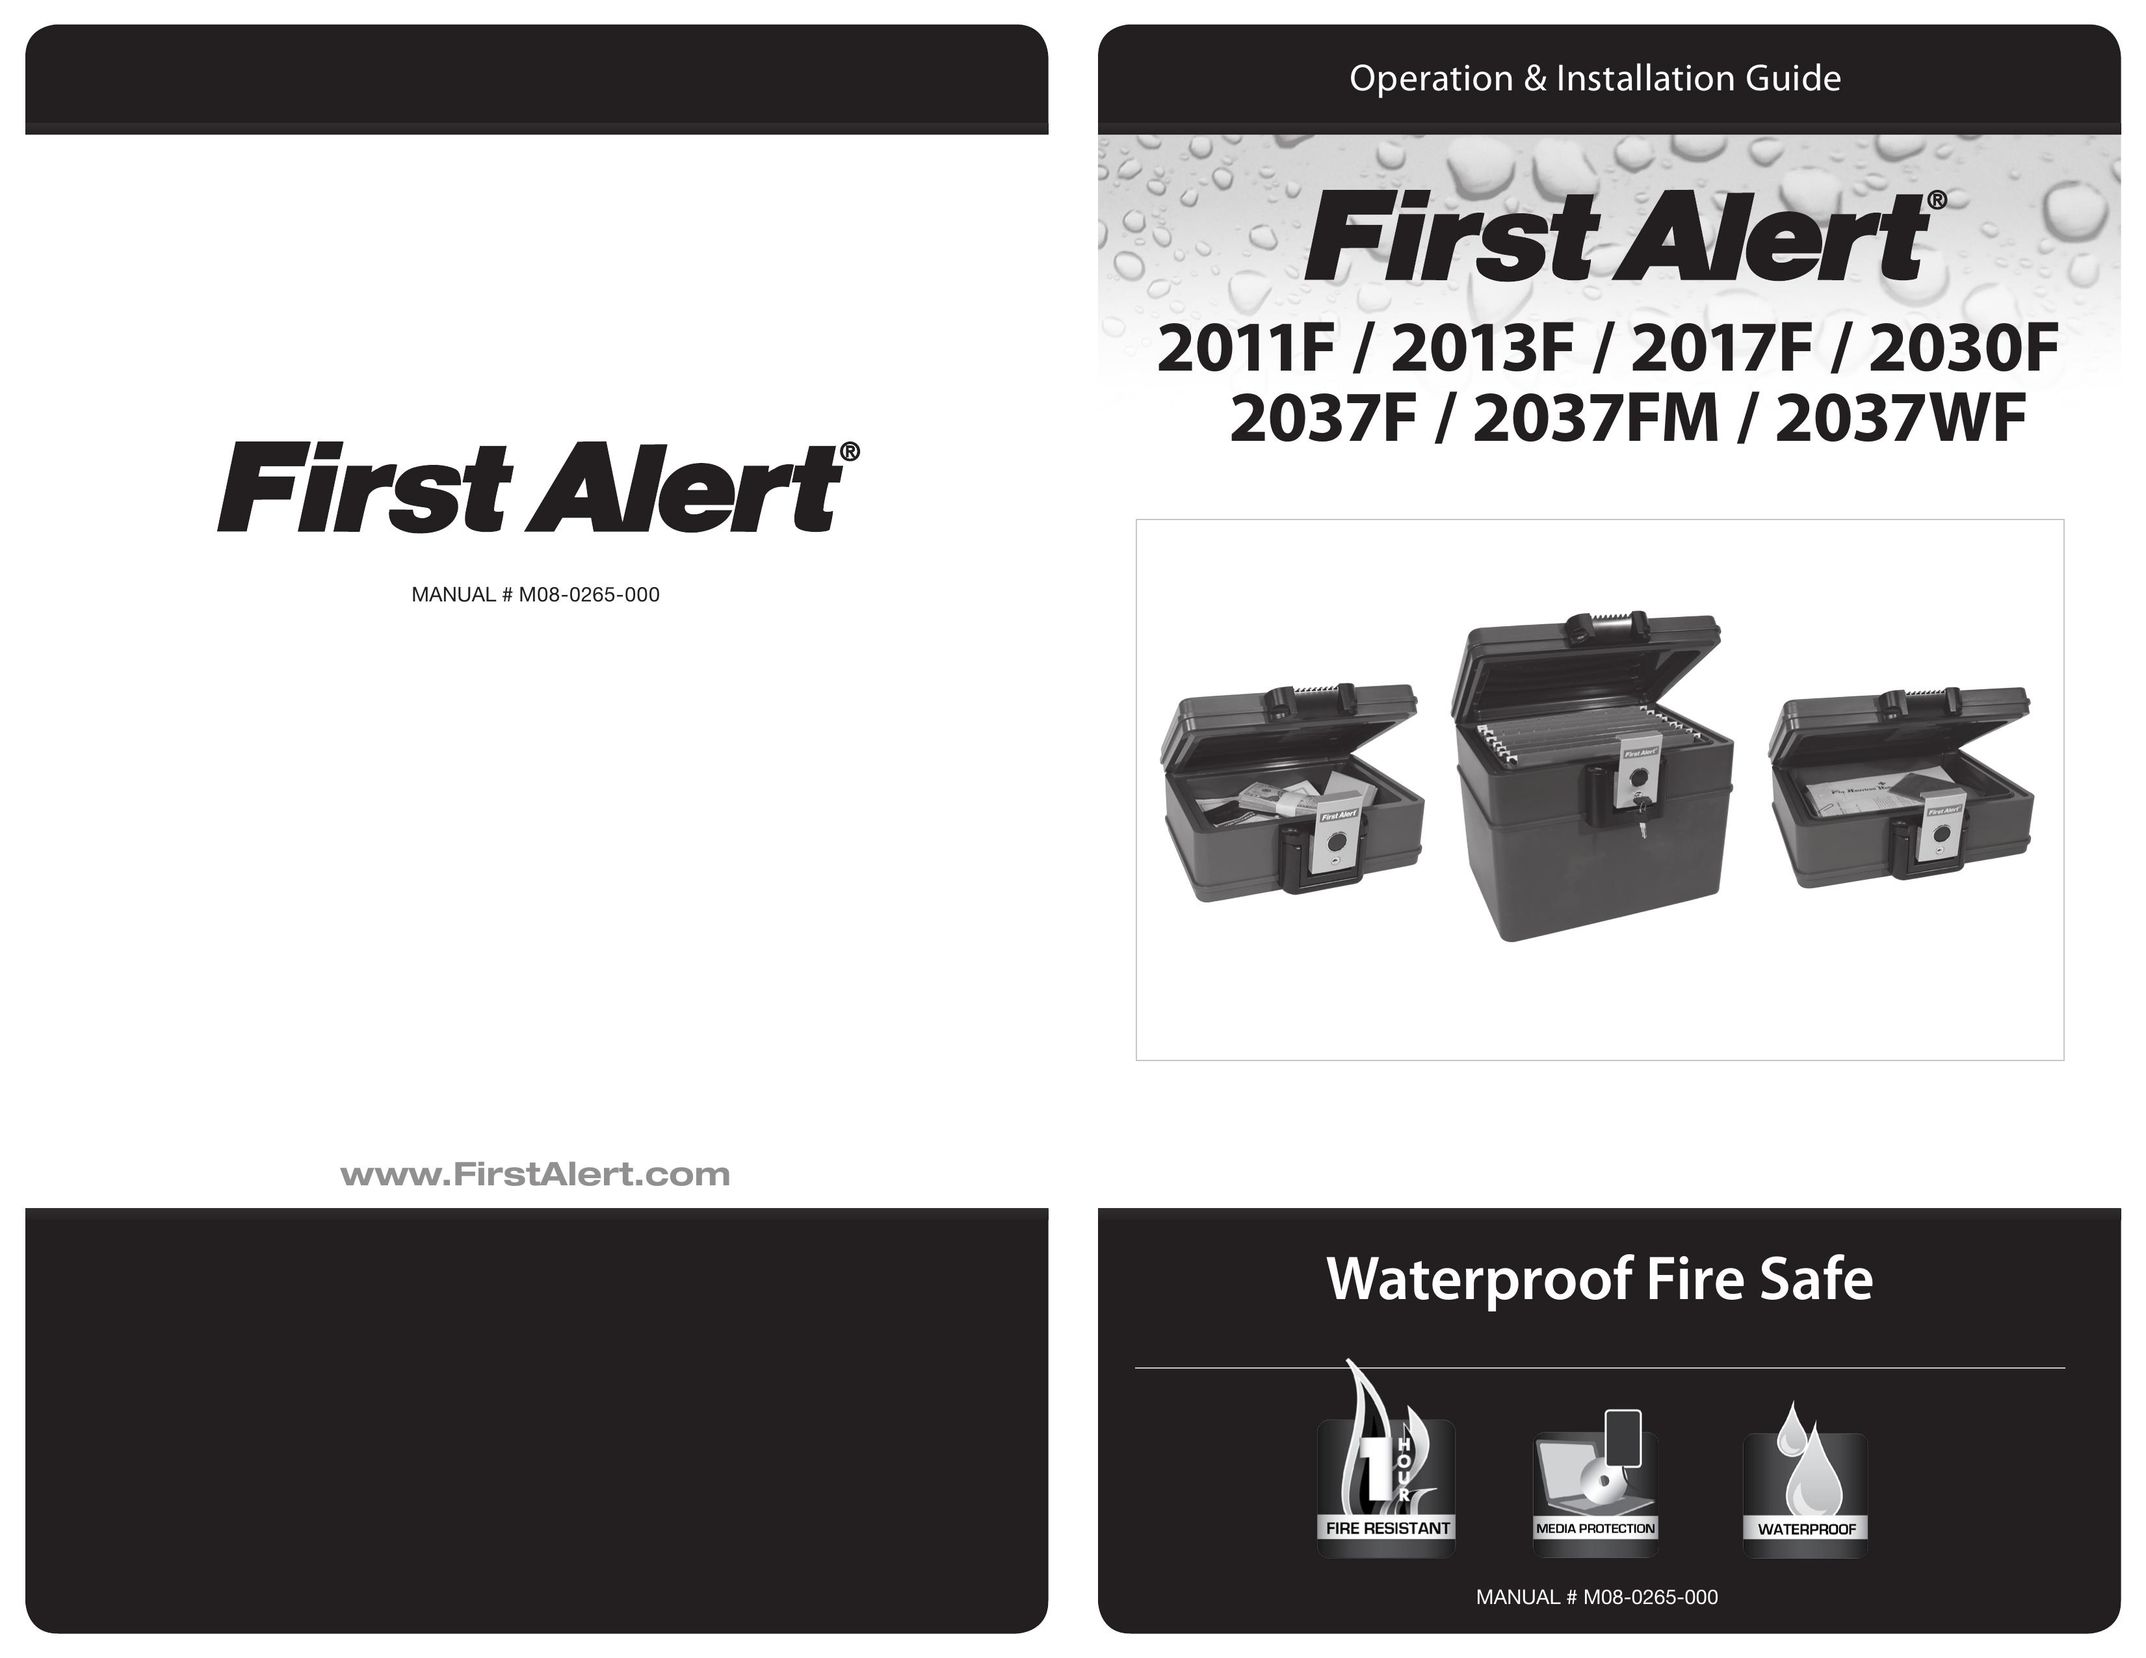 First Alert 2030F Portable Media Storage User Manual